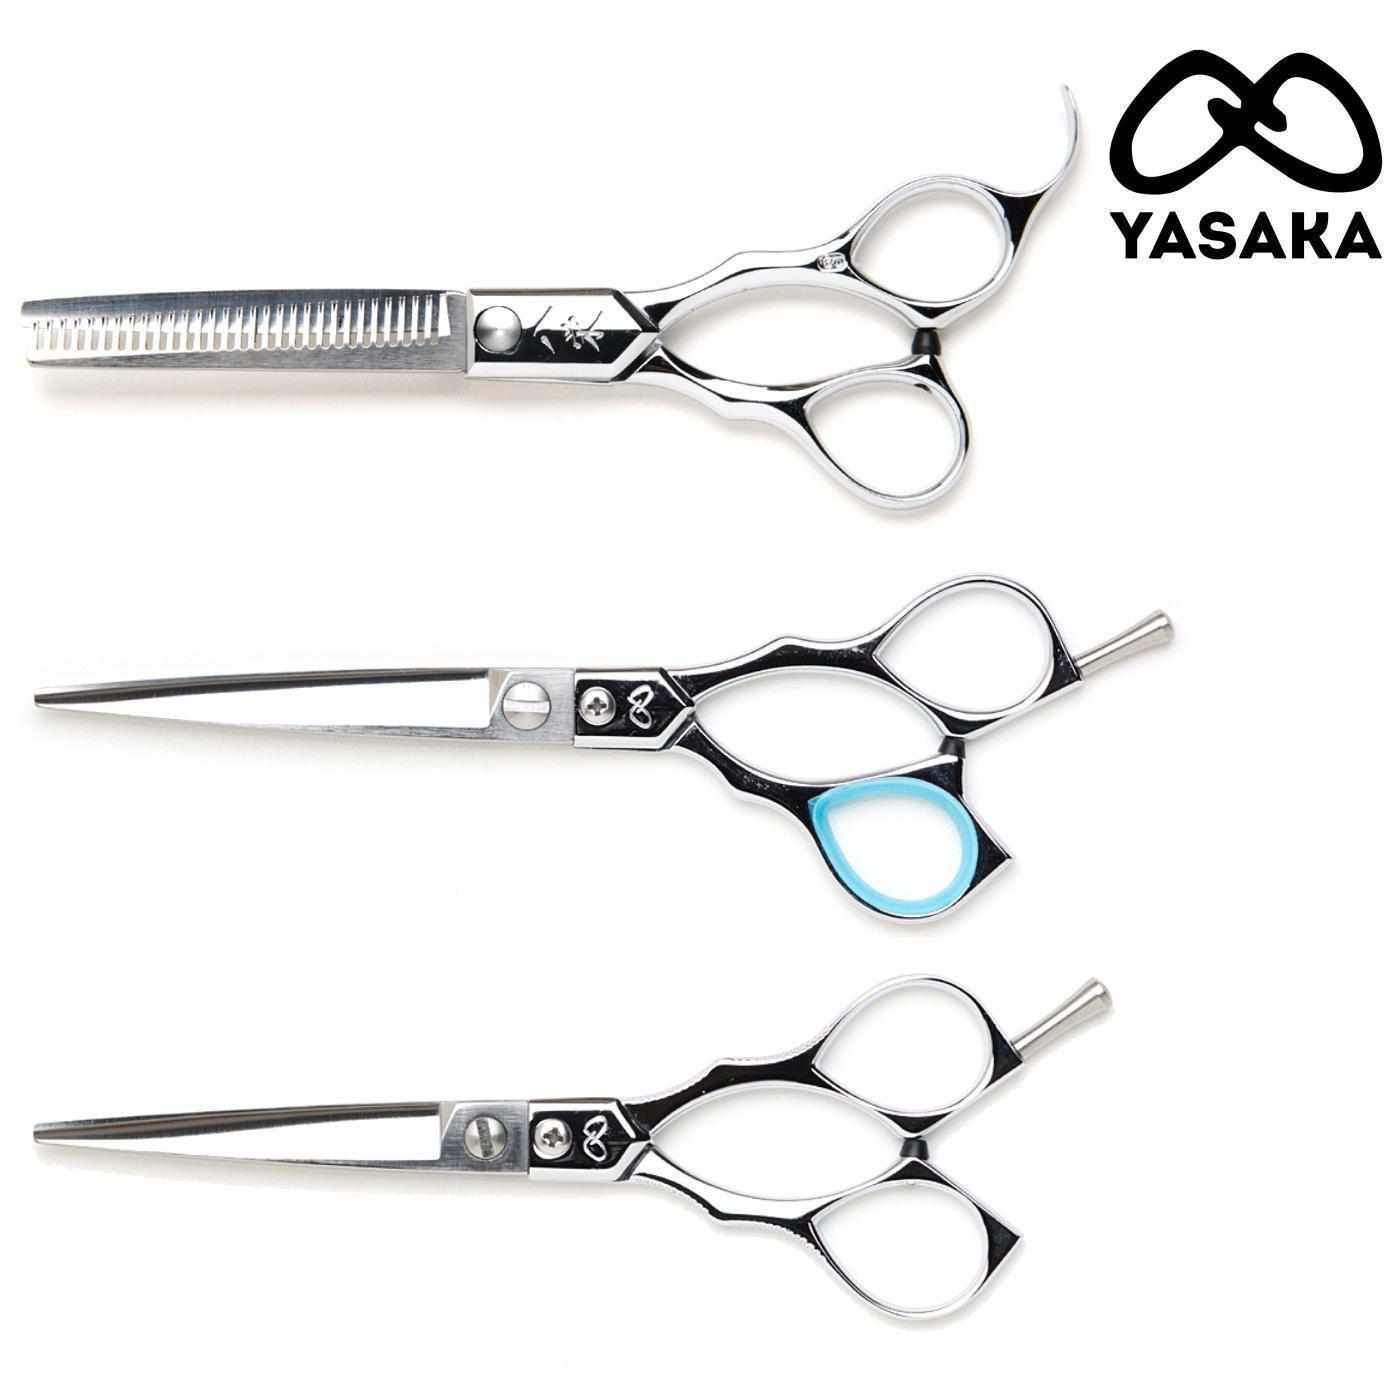 Yasaka Hairdressing Scissors 3pc Master Set - Japan Scissors USA